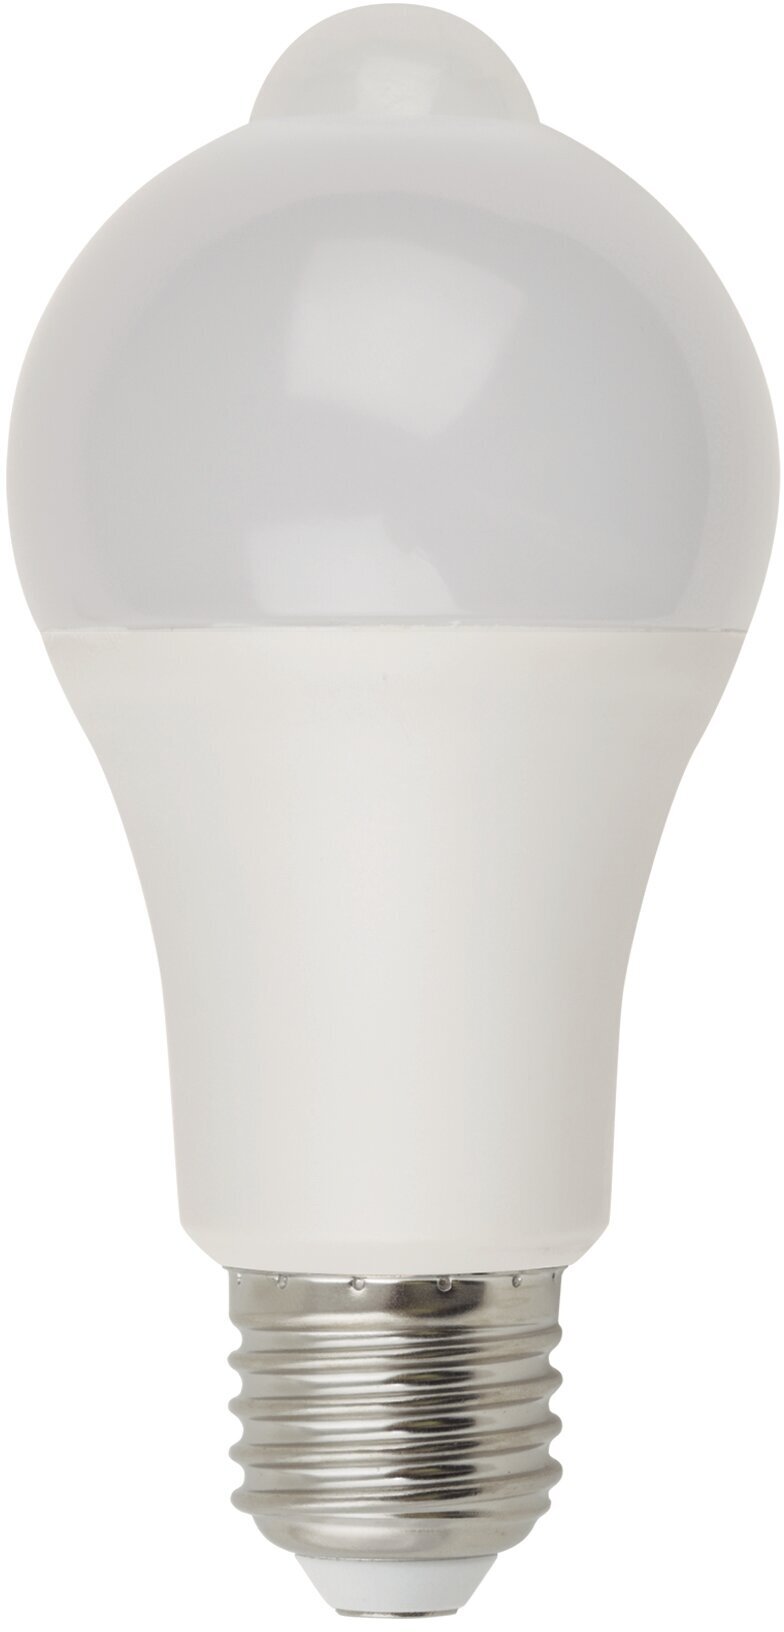 Лампа светодиодная Uniel Smart UL-00005713, E27, A60, 12 Вт, 4000 К